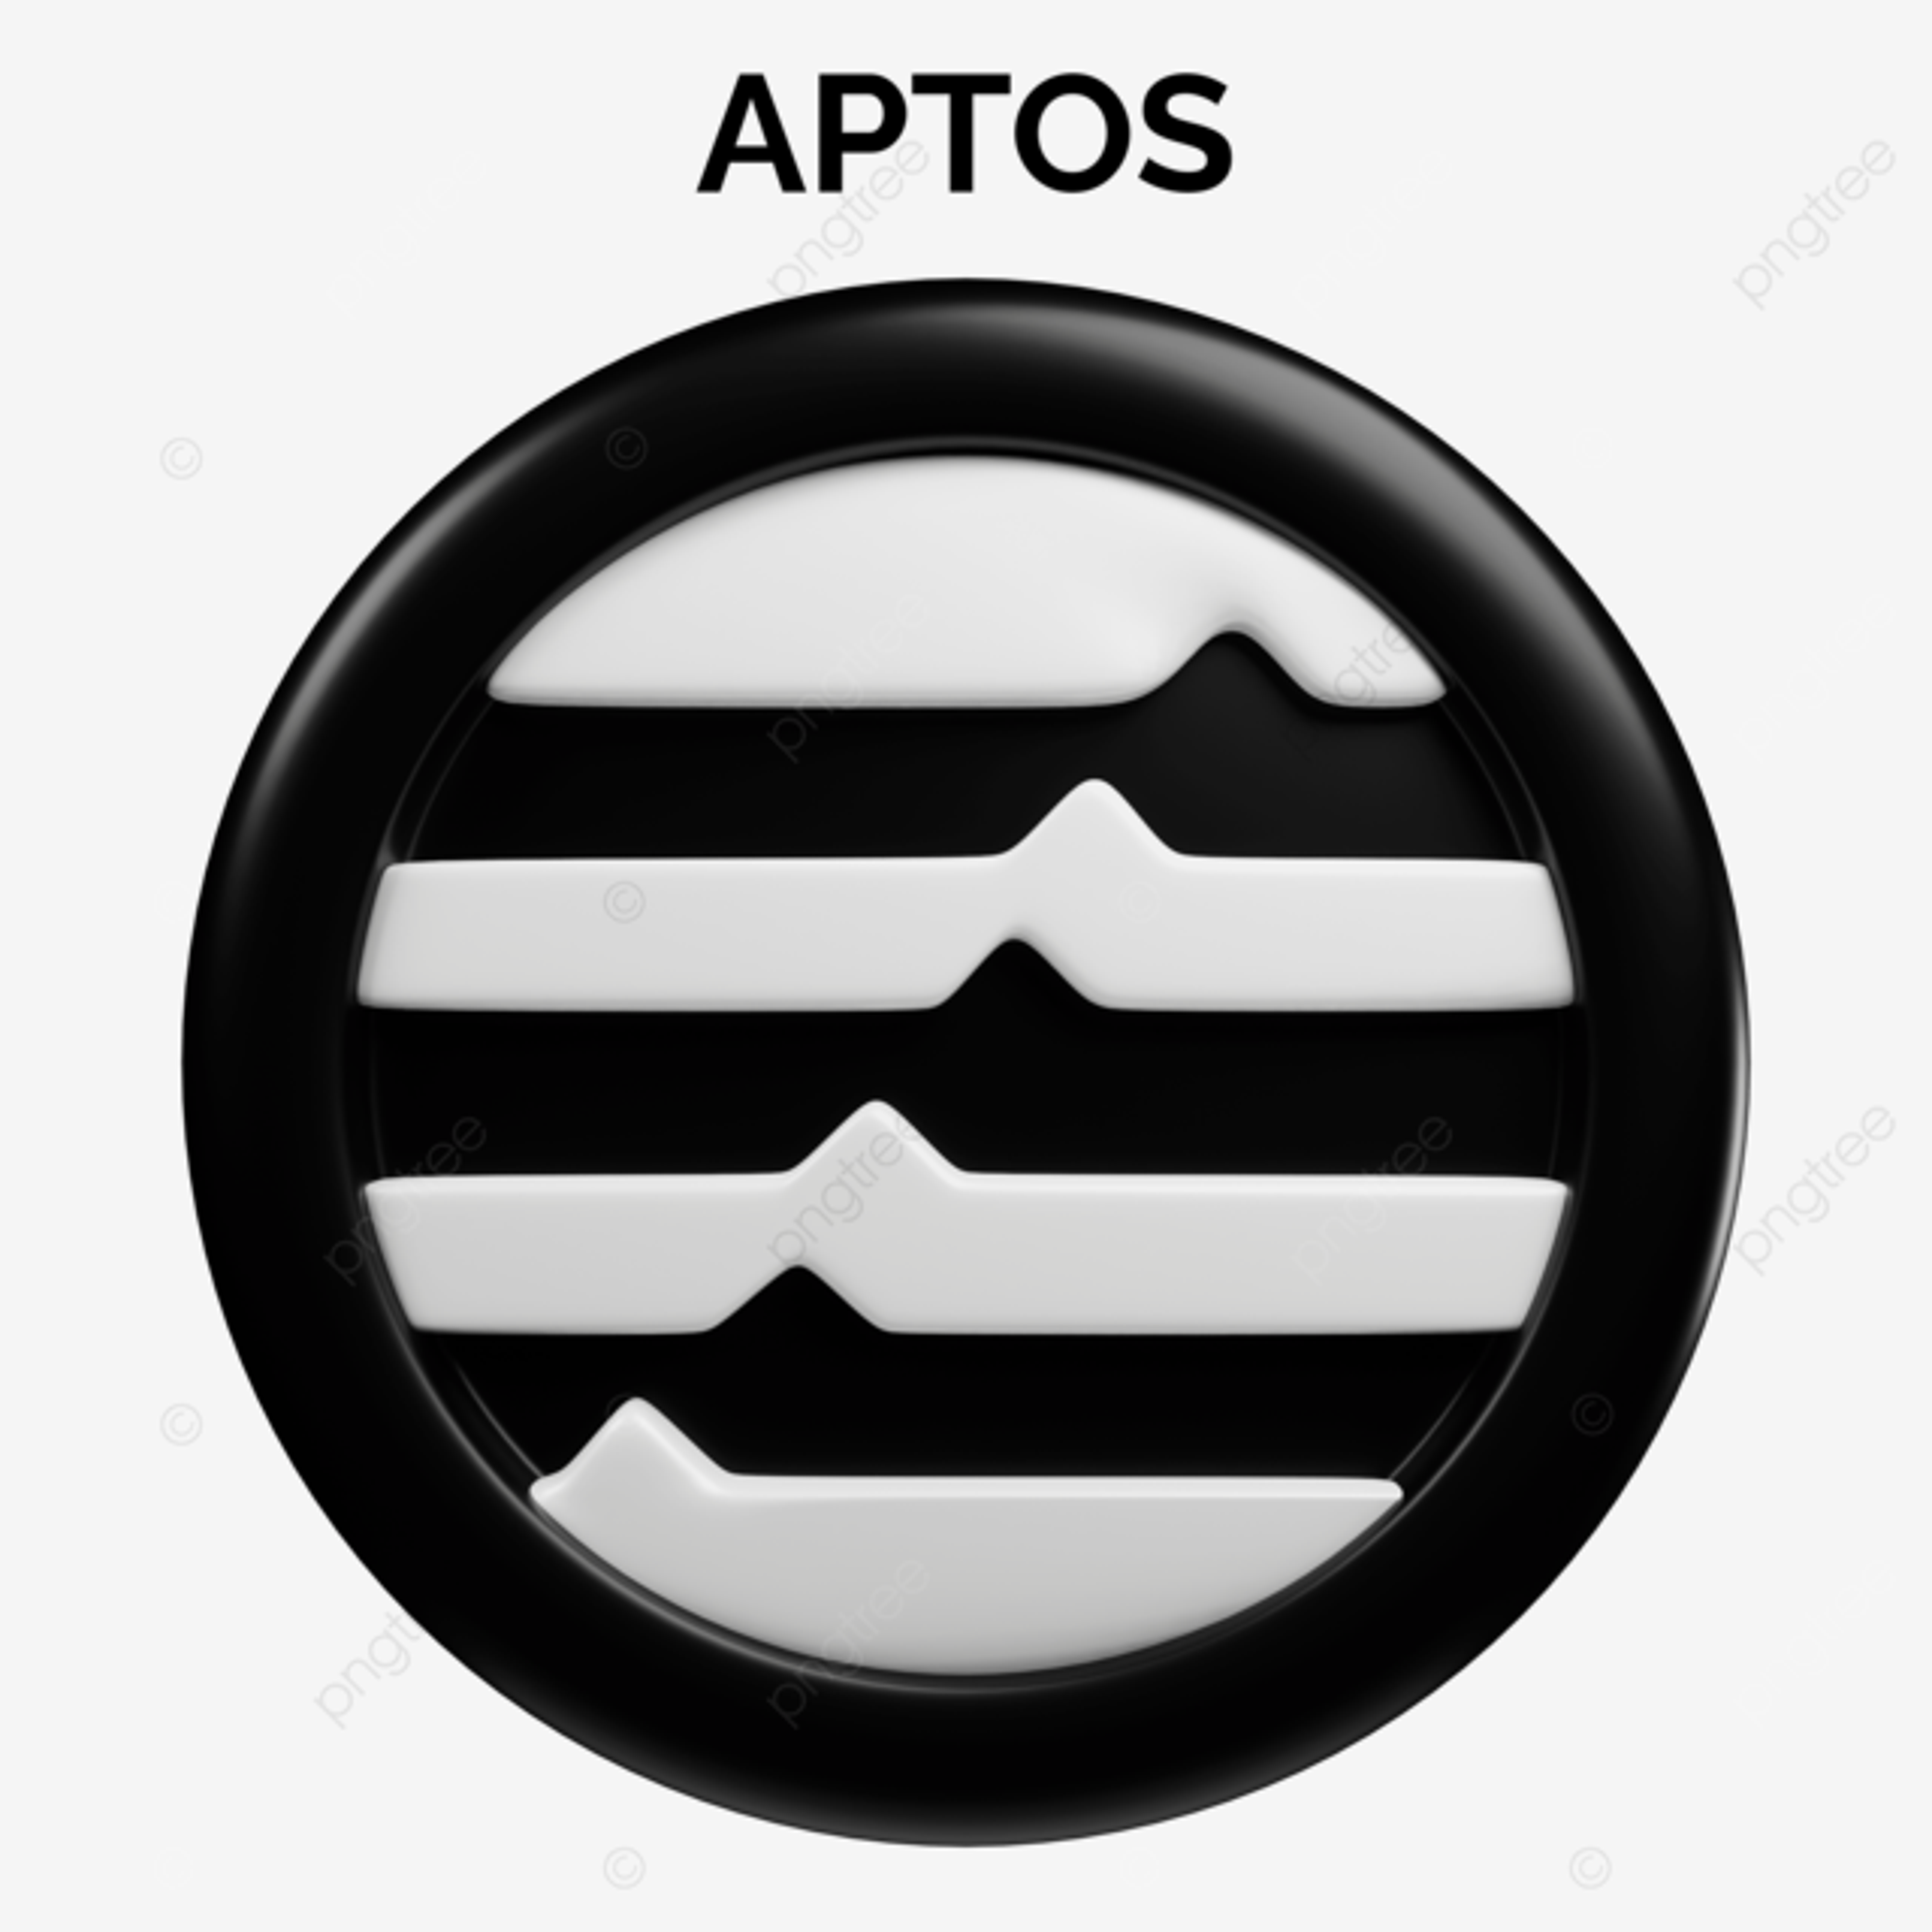 How to Buy Aptos (APT)